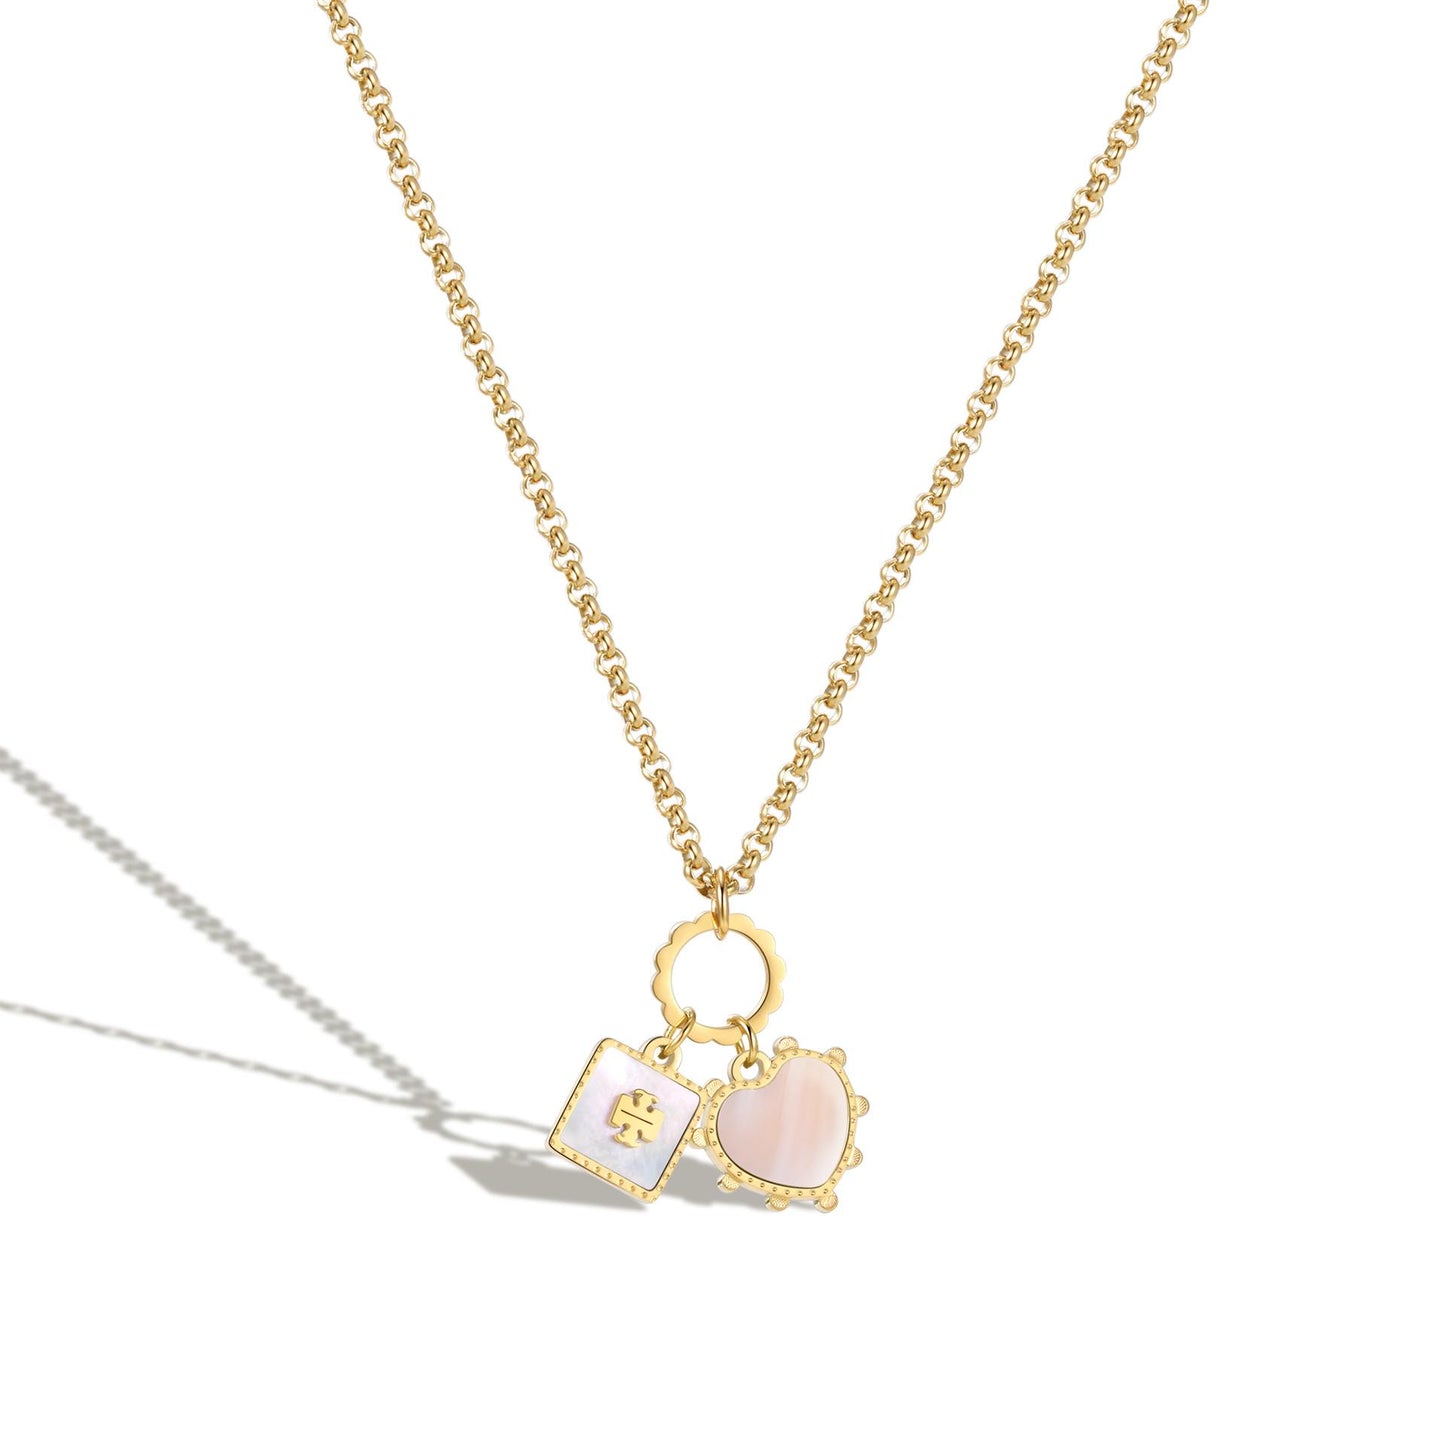 Non-fading love necklace heart pendant niche necklace